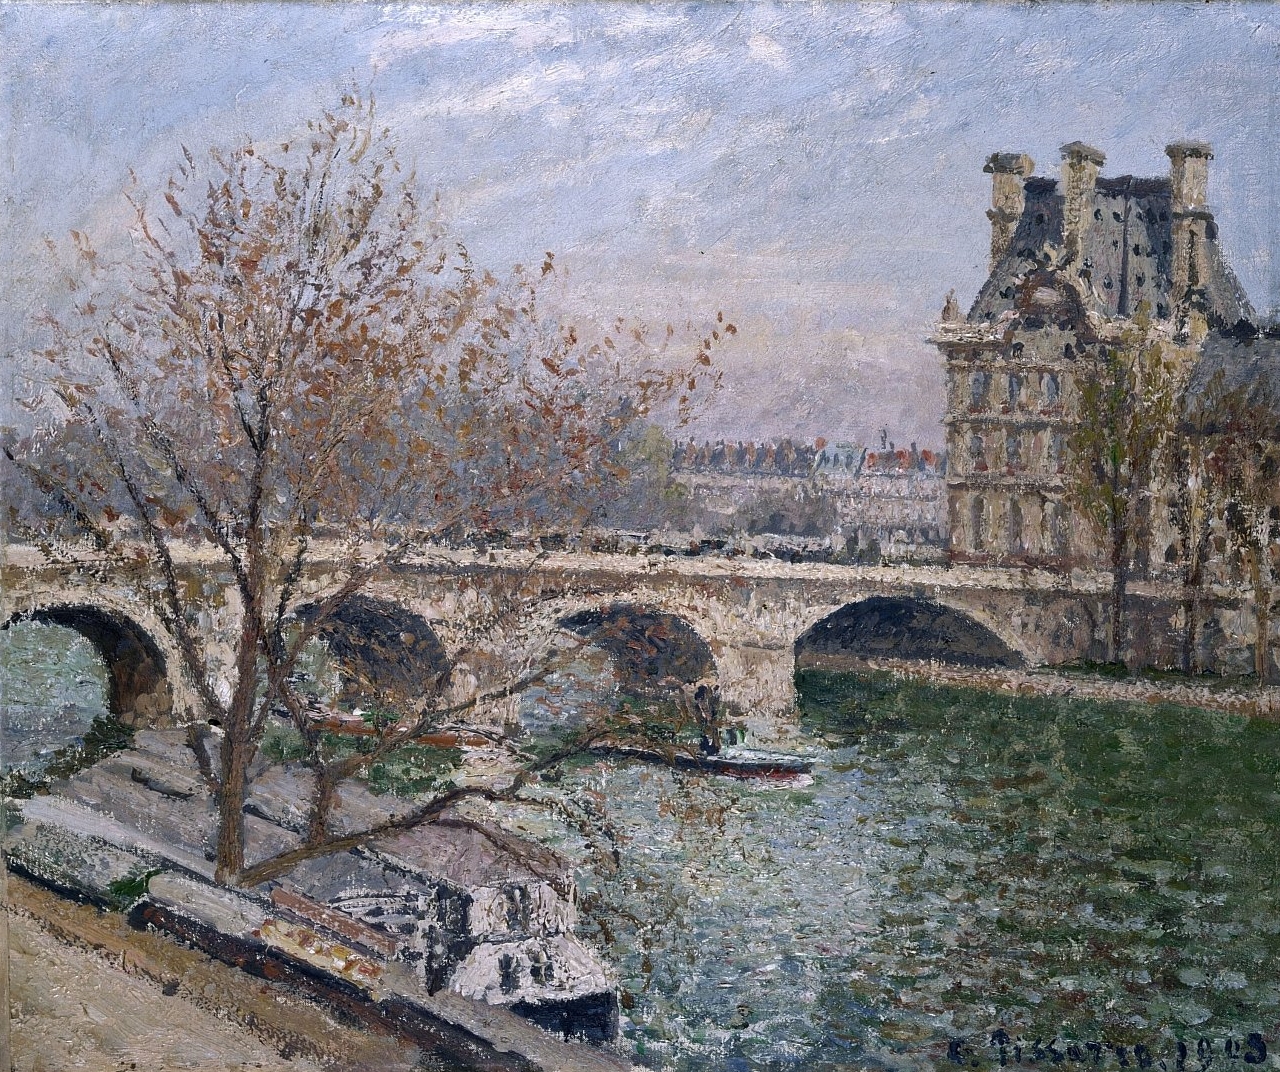 Camille+Pissarro-1830-1903 (299).jpg